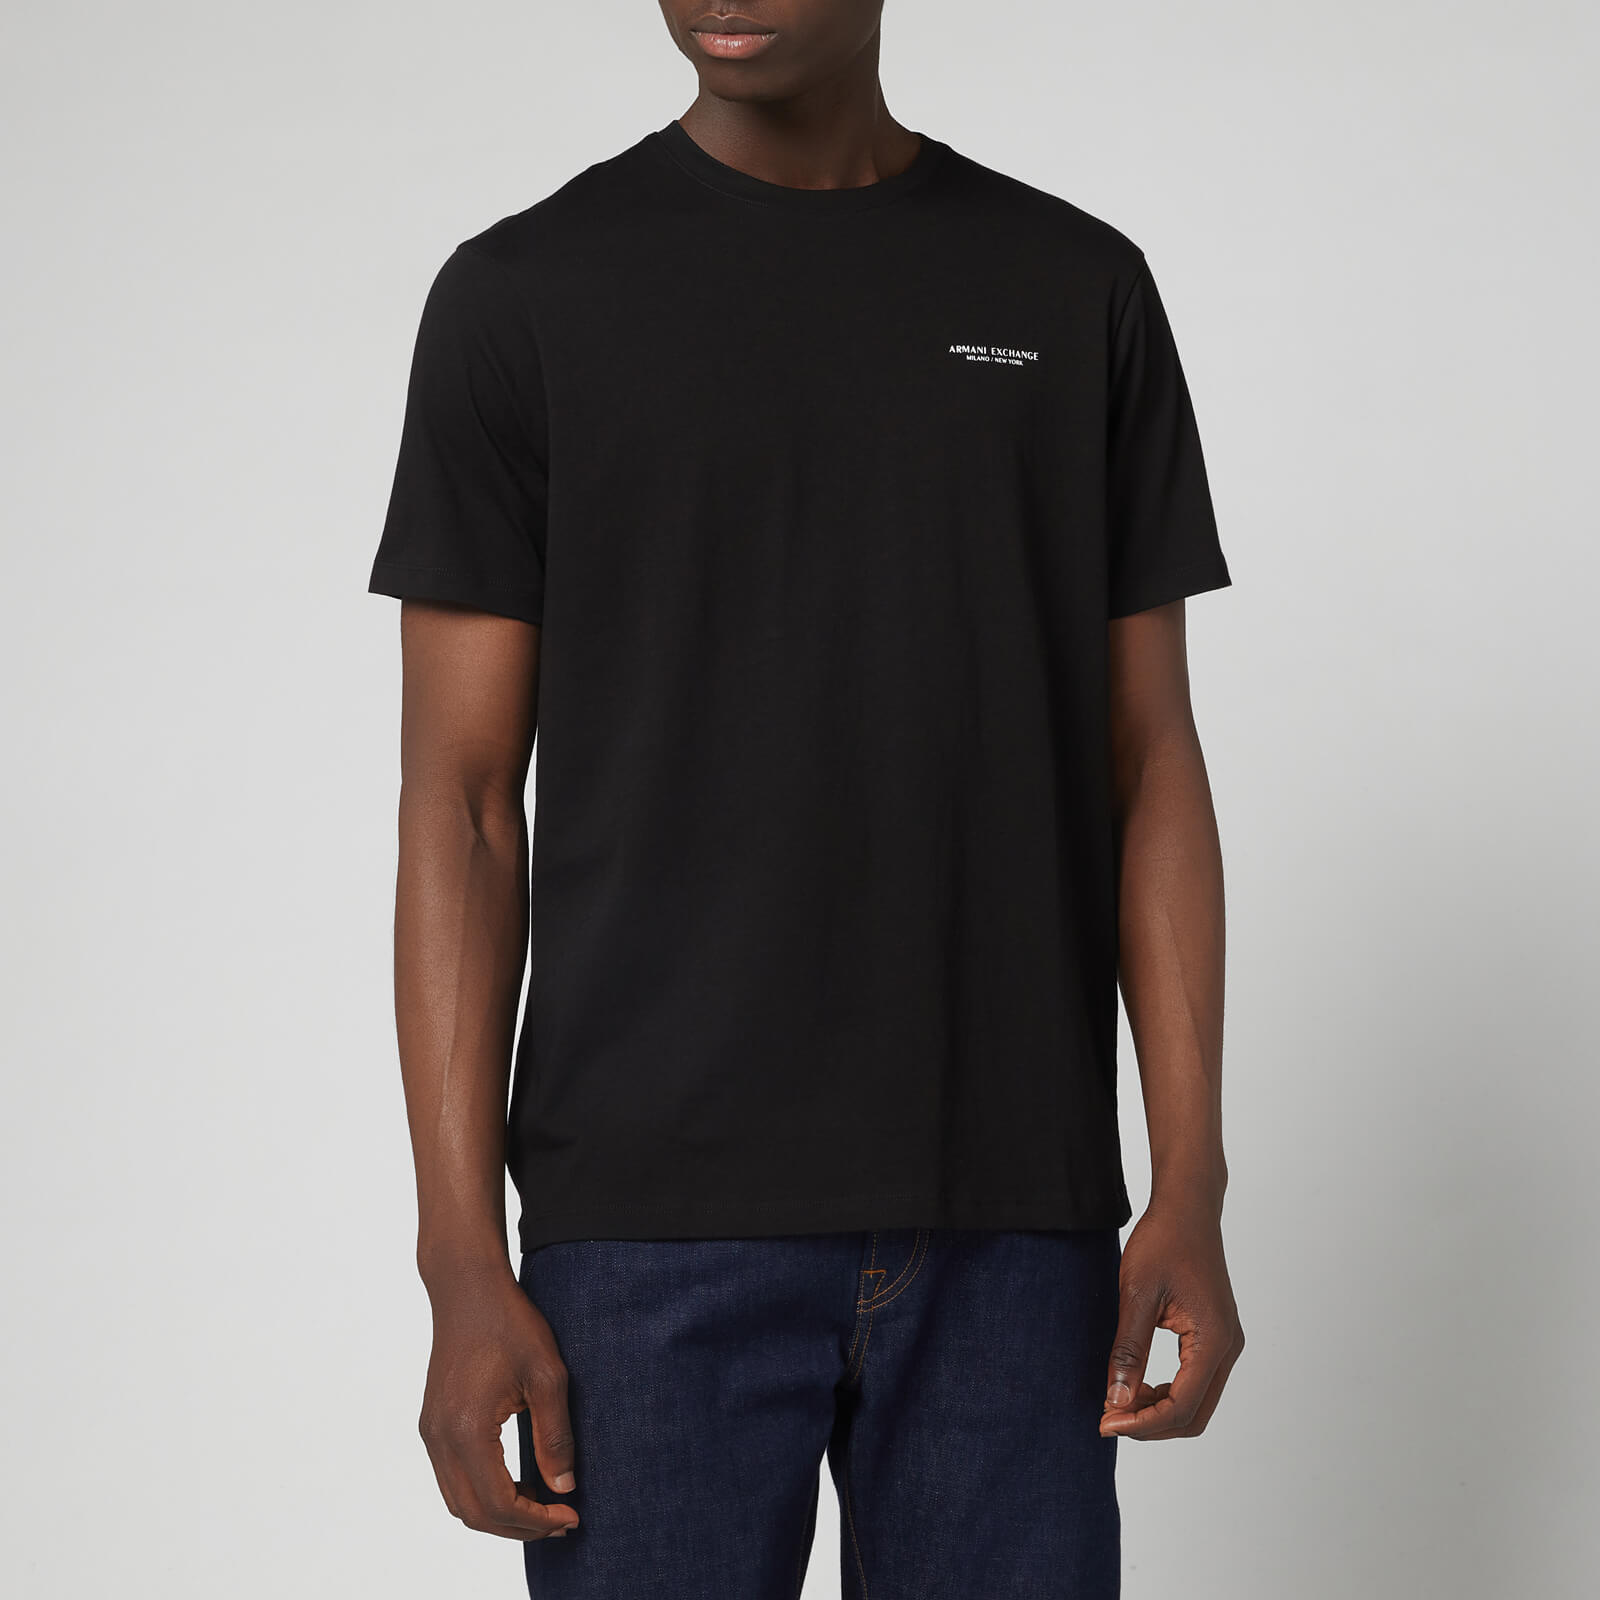 Armani Exchange Men's Small Logo T-Shirt - Black - S